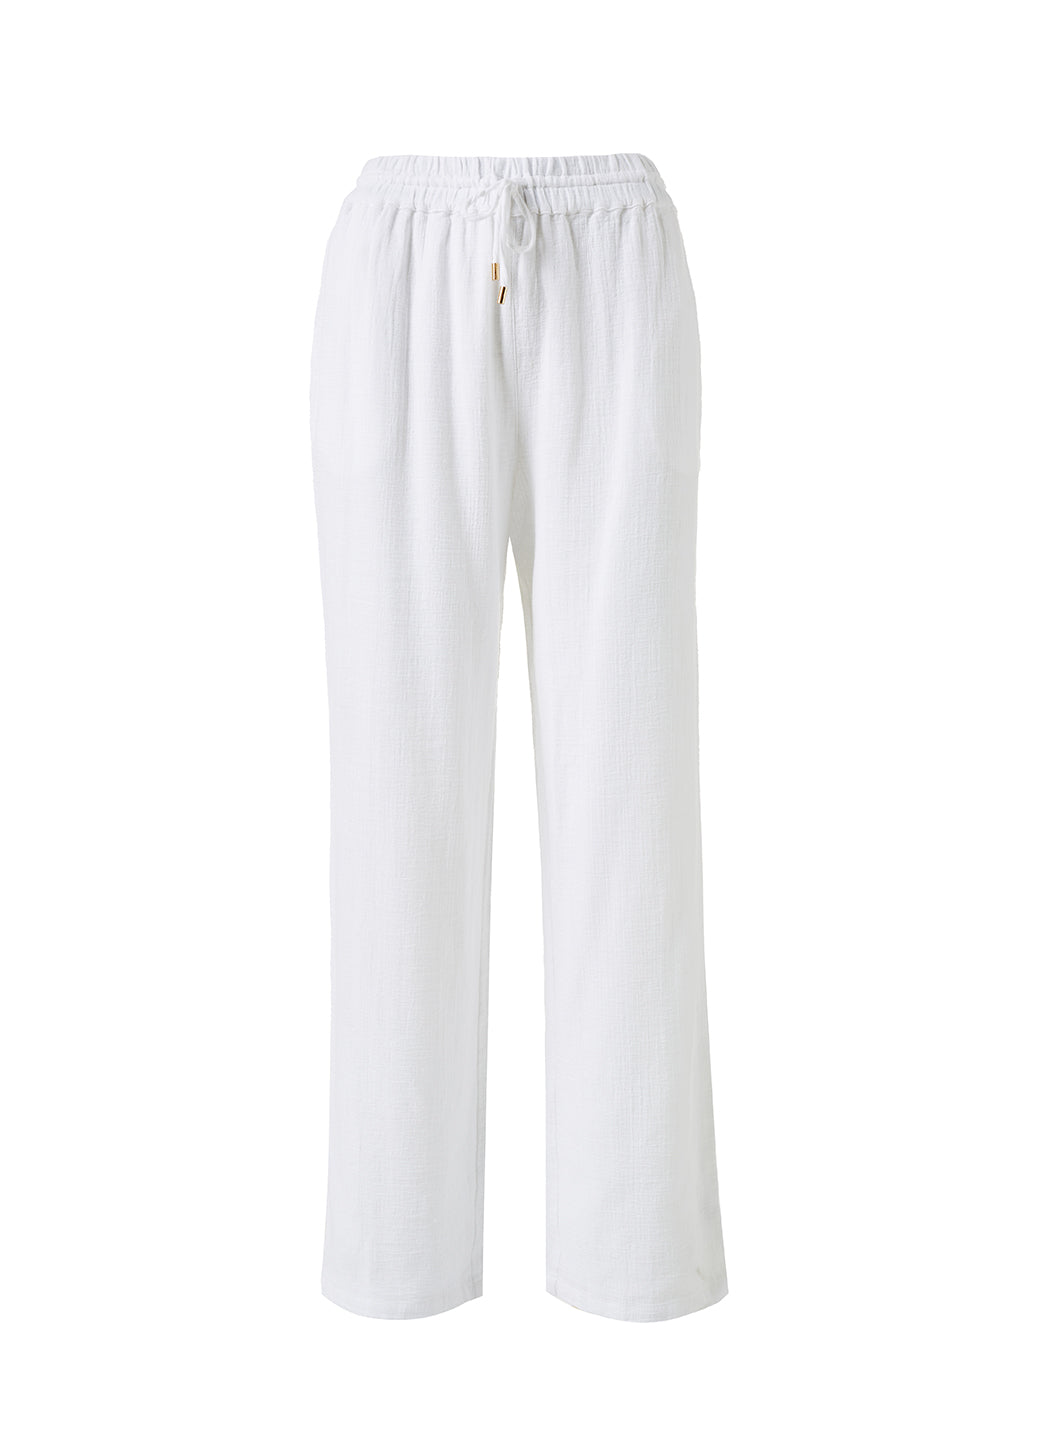 Buy White Drawstring Waist Mens Kurta Trousers from Next USA